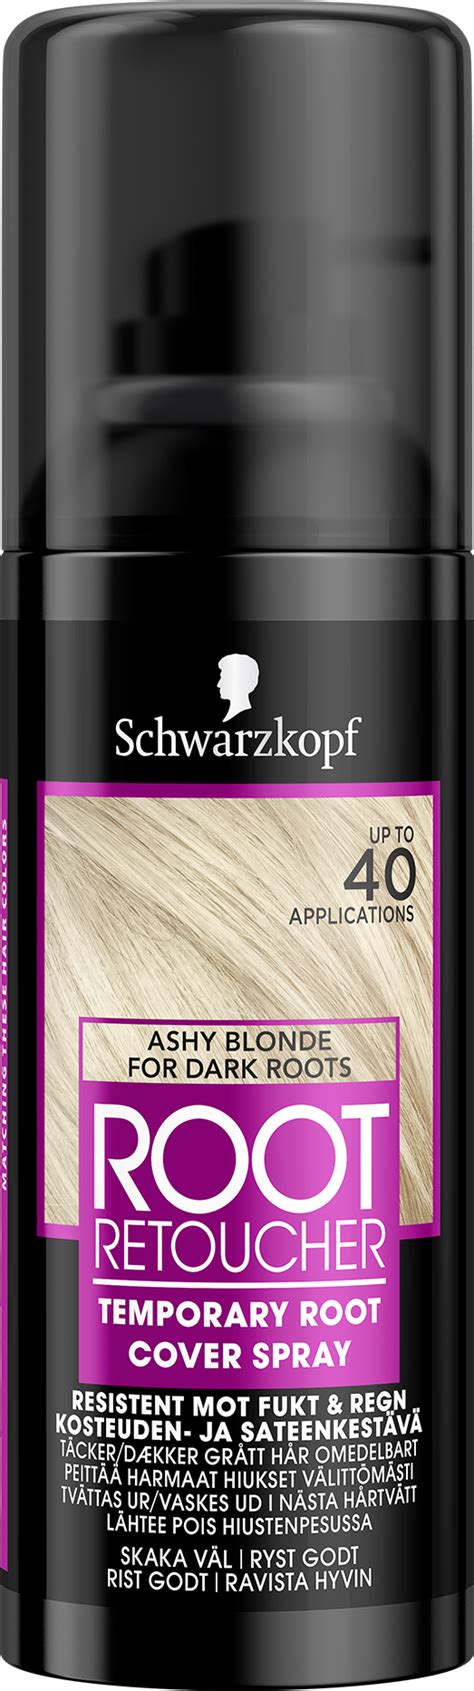 Schwarzkopf Root Retoucher Root Cover Spray Ashy Blonde For Dark Roots